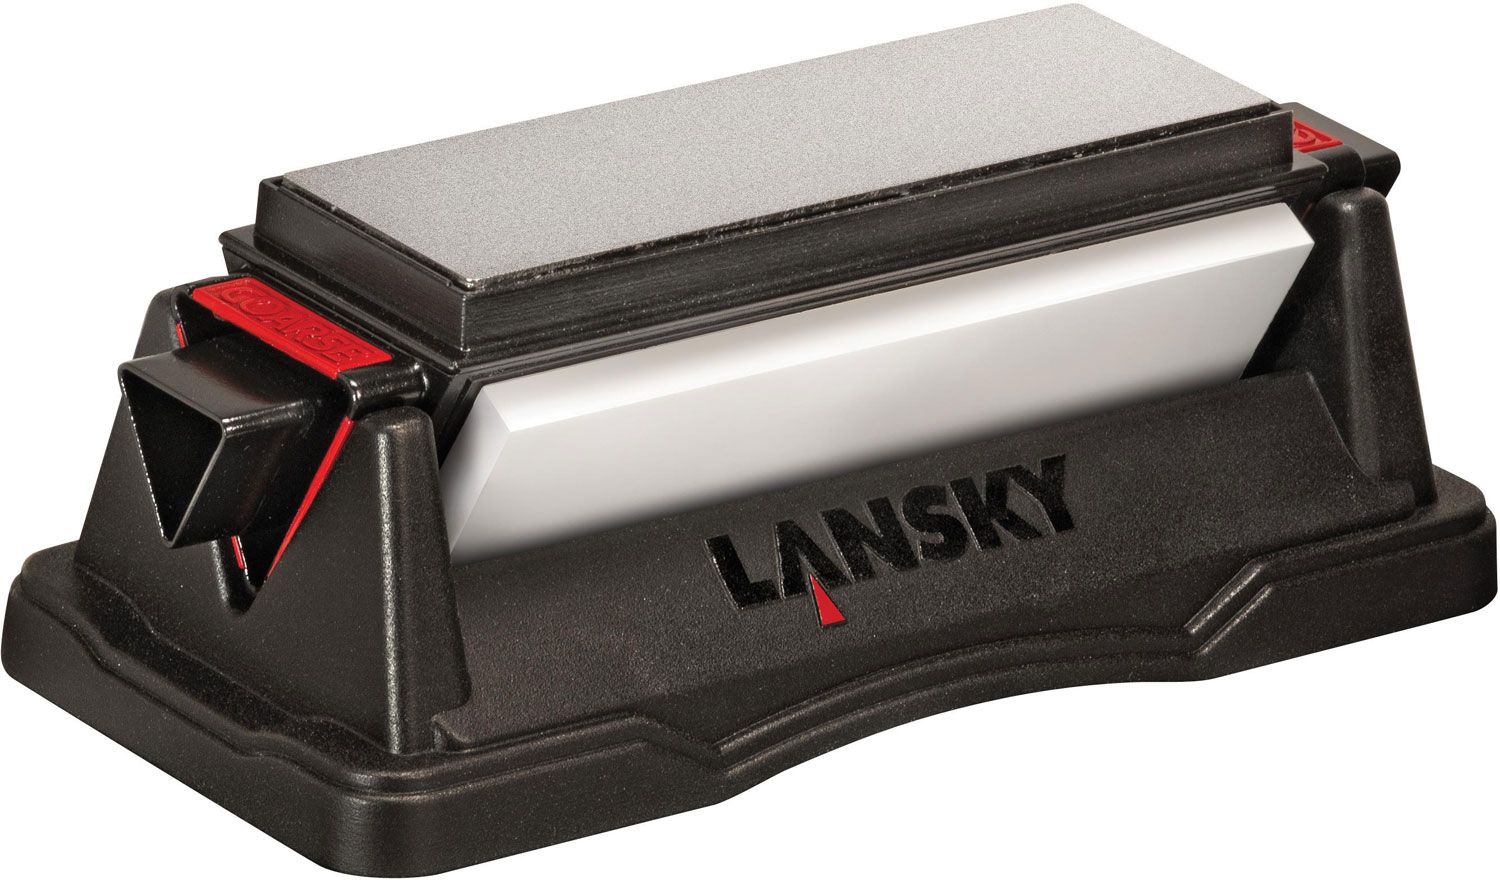 Lansky Diamond Standard Sharpening System with Coarse, Medium and Fine Hones